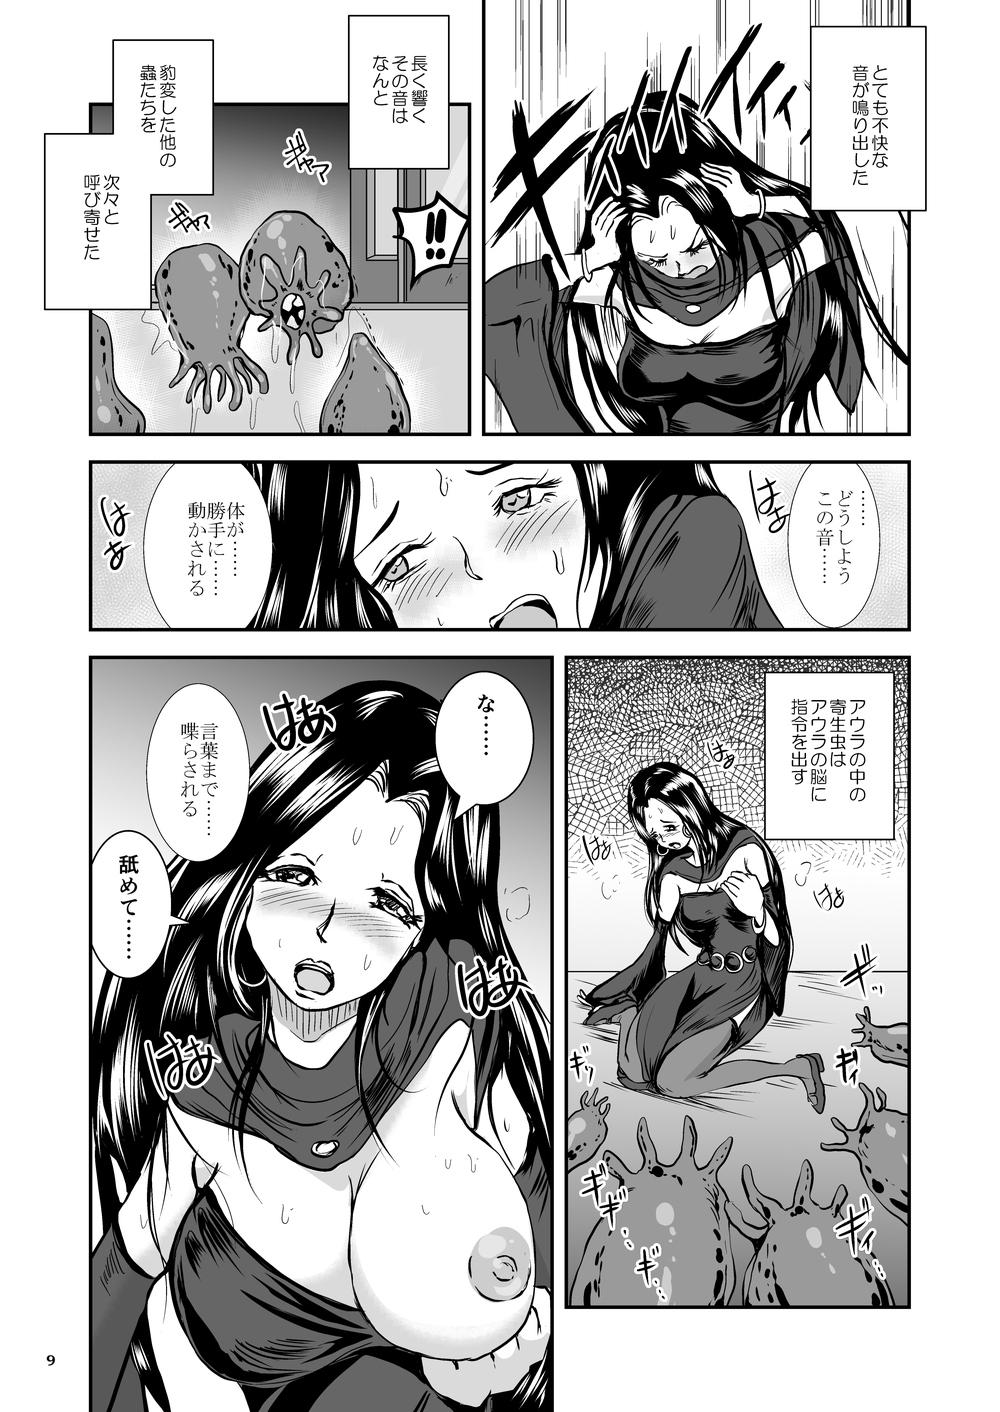 Bro Oonamekuji to Kurokami no Mahoutsukai - Parasitized Giant Slugs V.S. Sorceress of the Black Hair as Aura Bangkok - Page 9